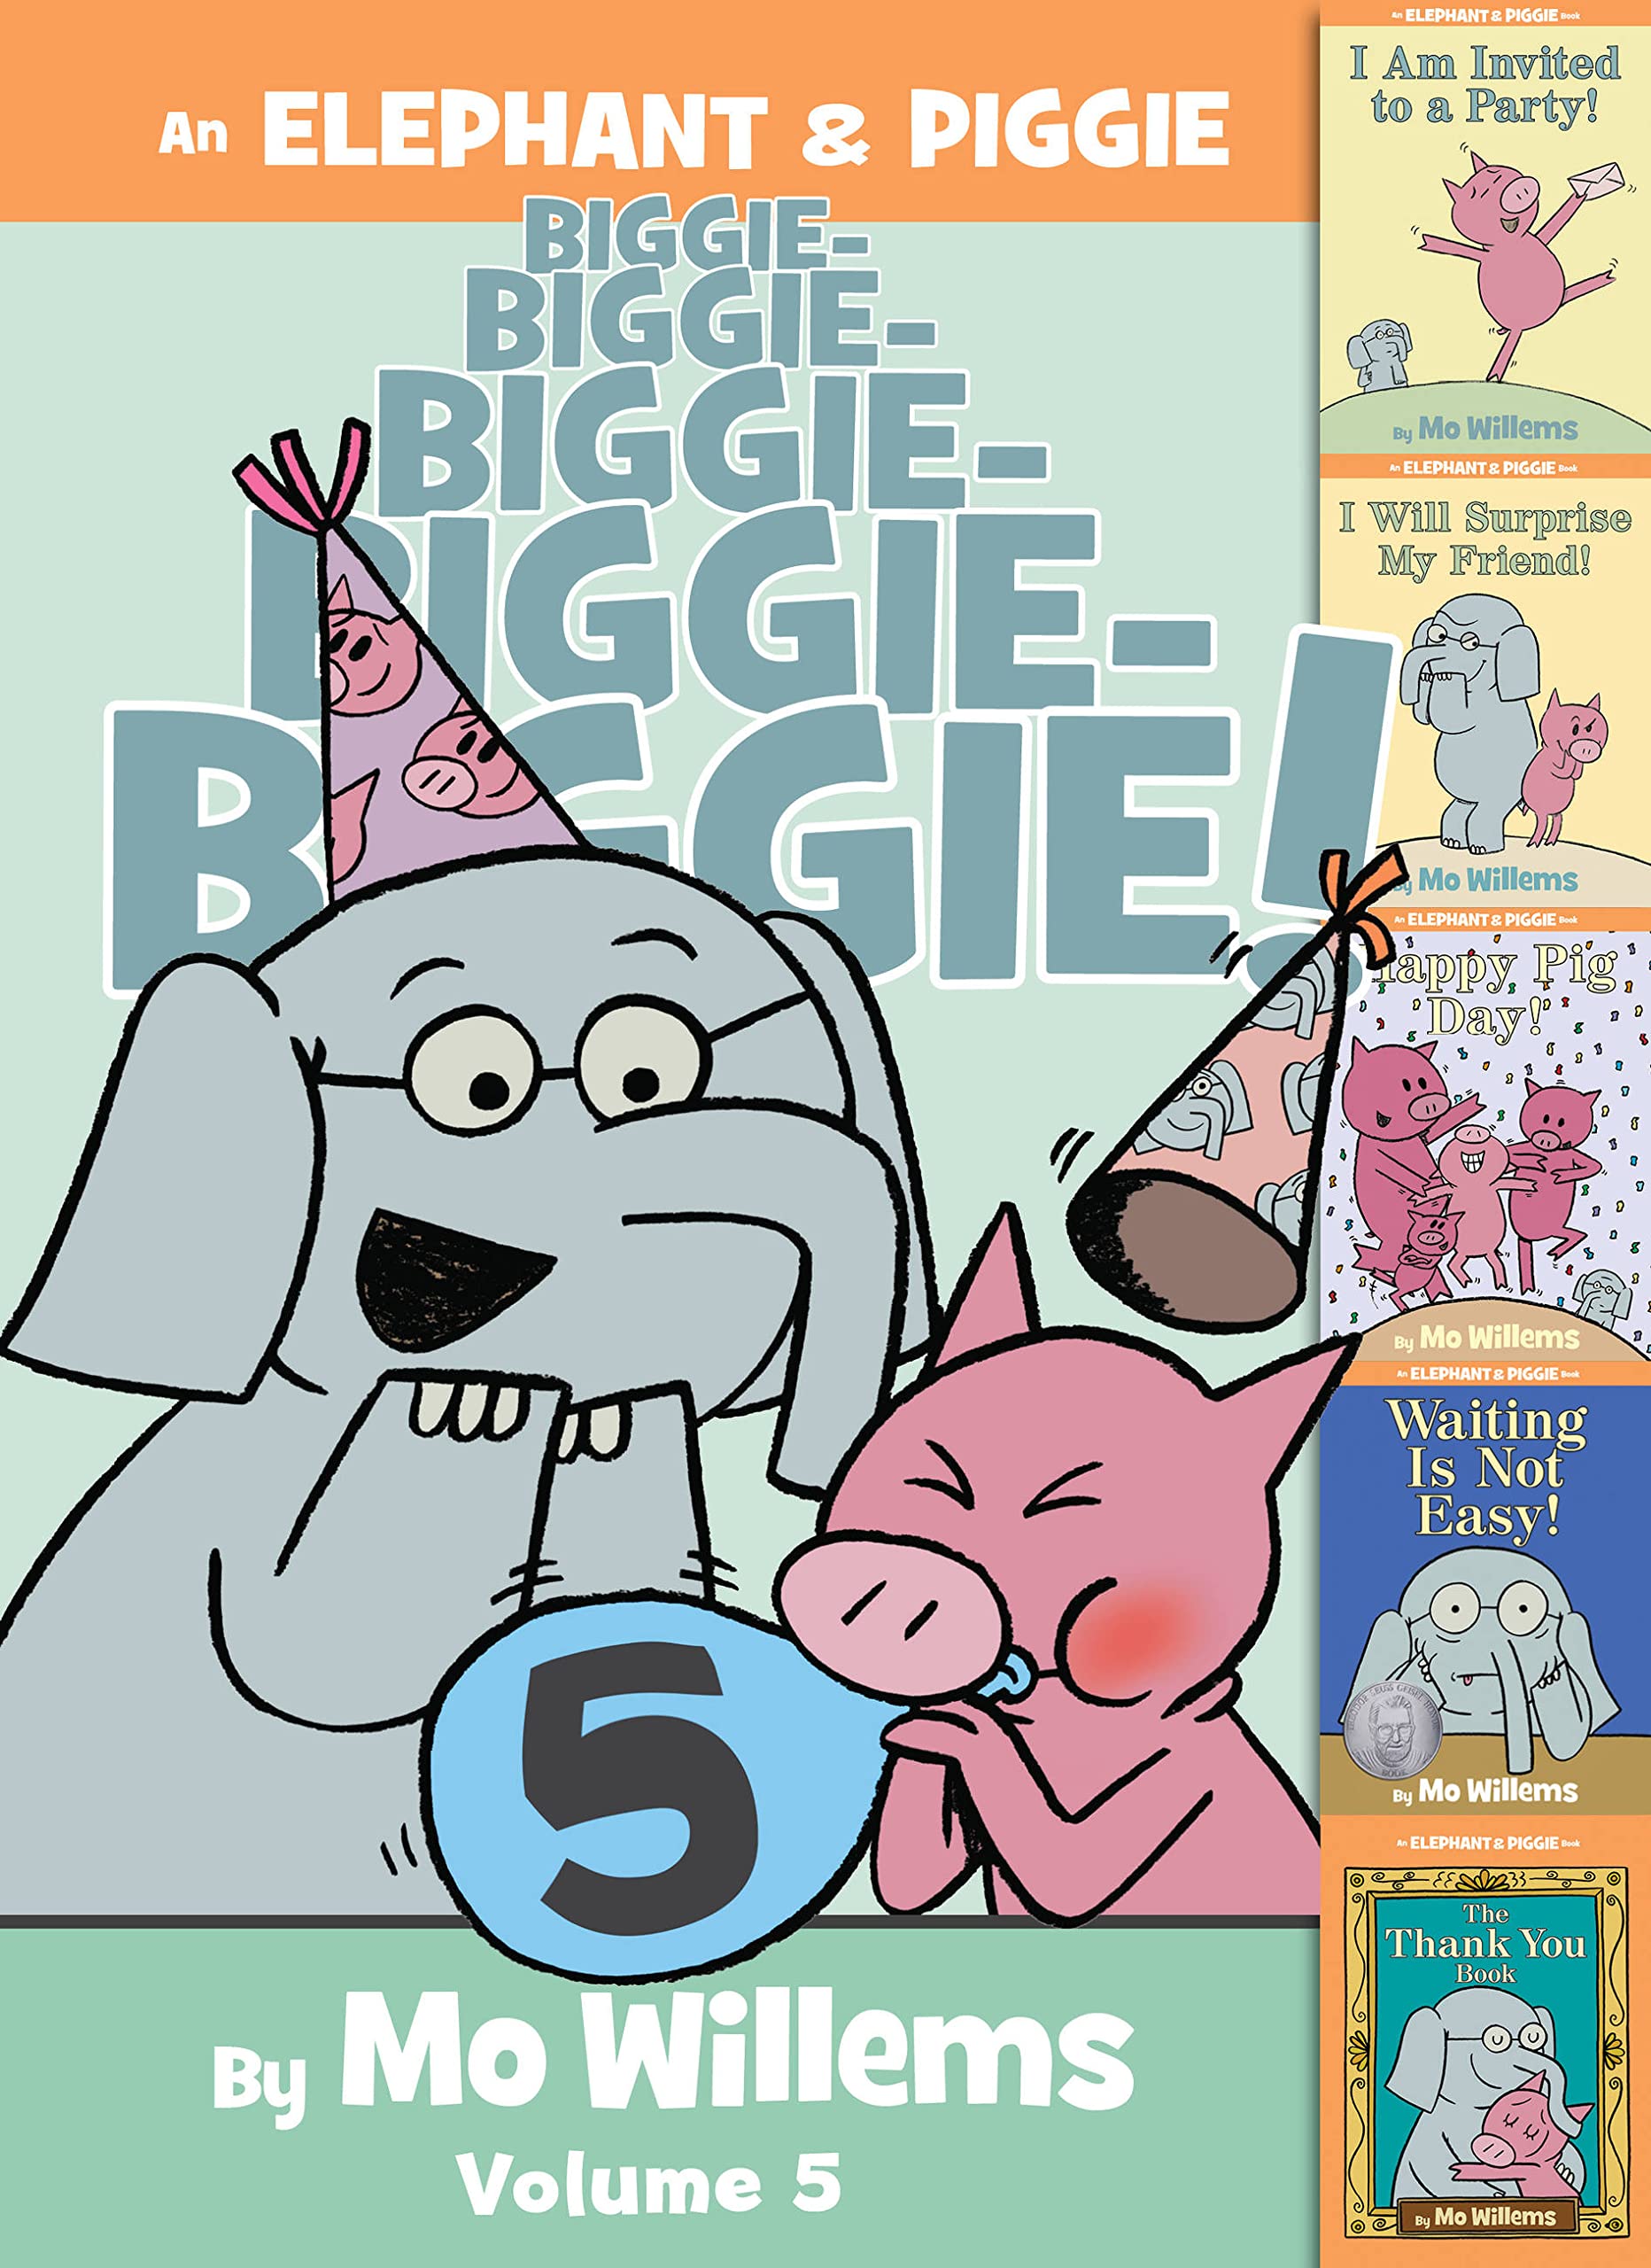 An Elephant & Piggie Biggie!: Volume 5